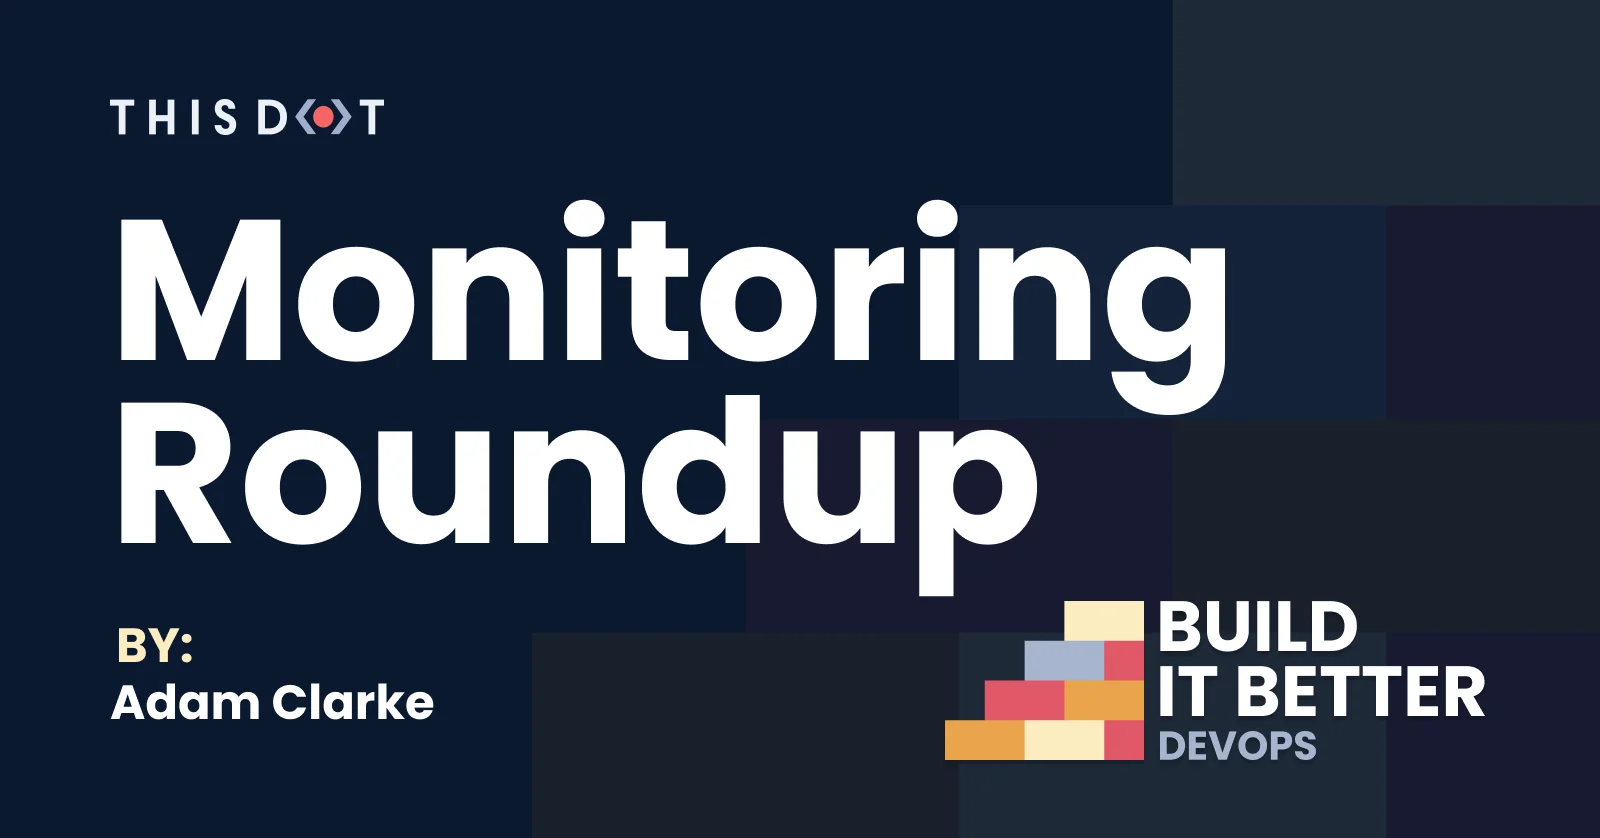 Build IT Better - DevOps - Monitoring Roundup cover image